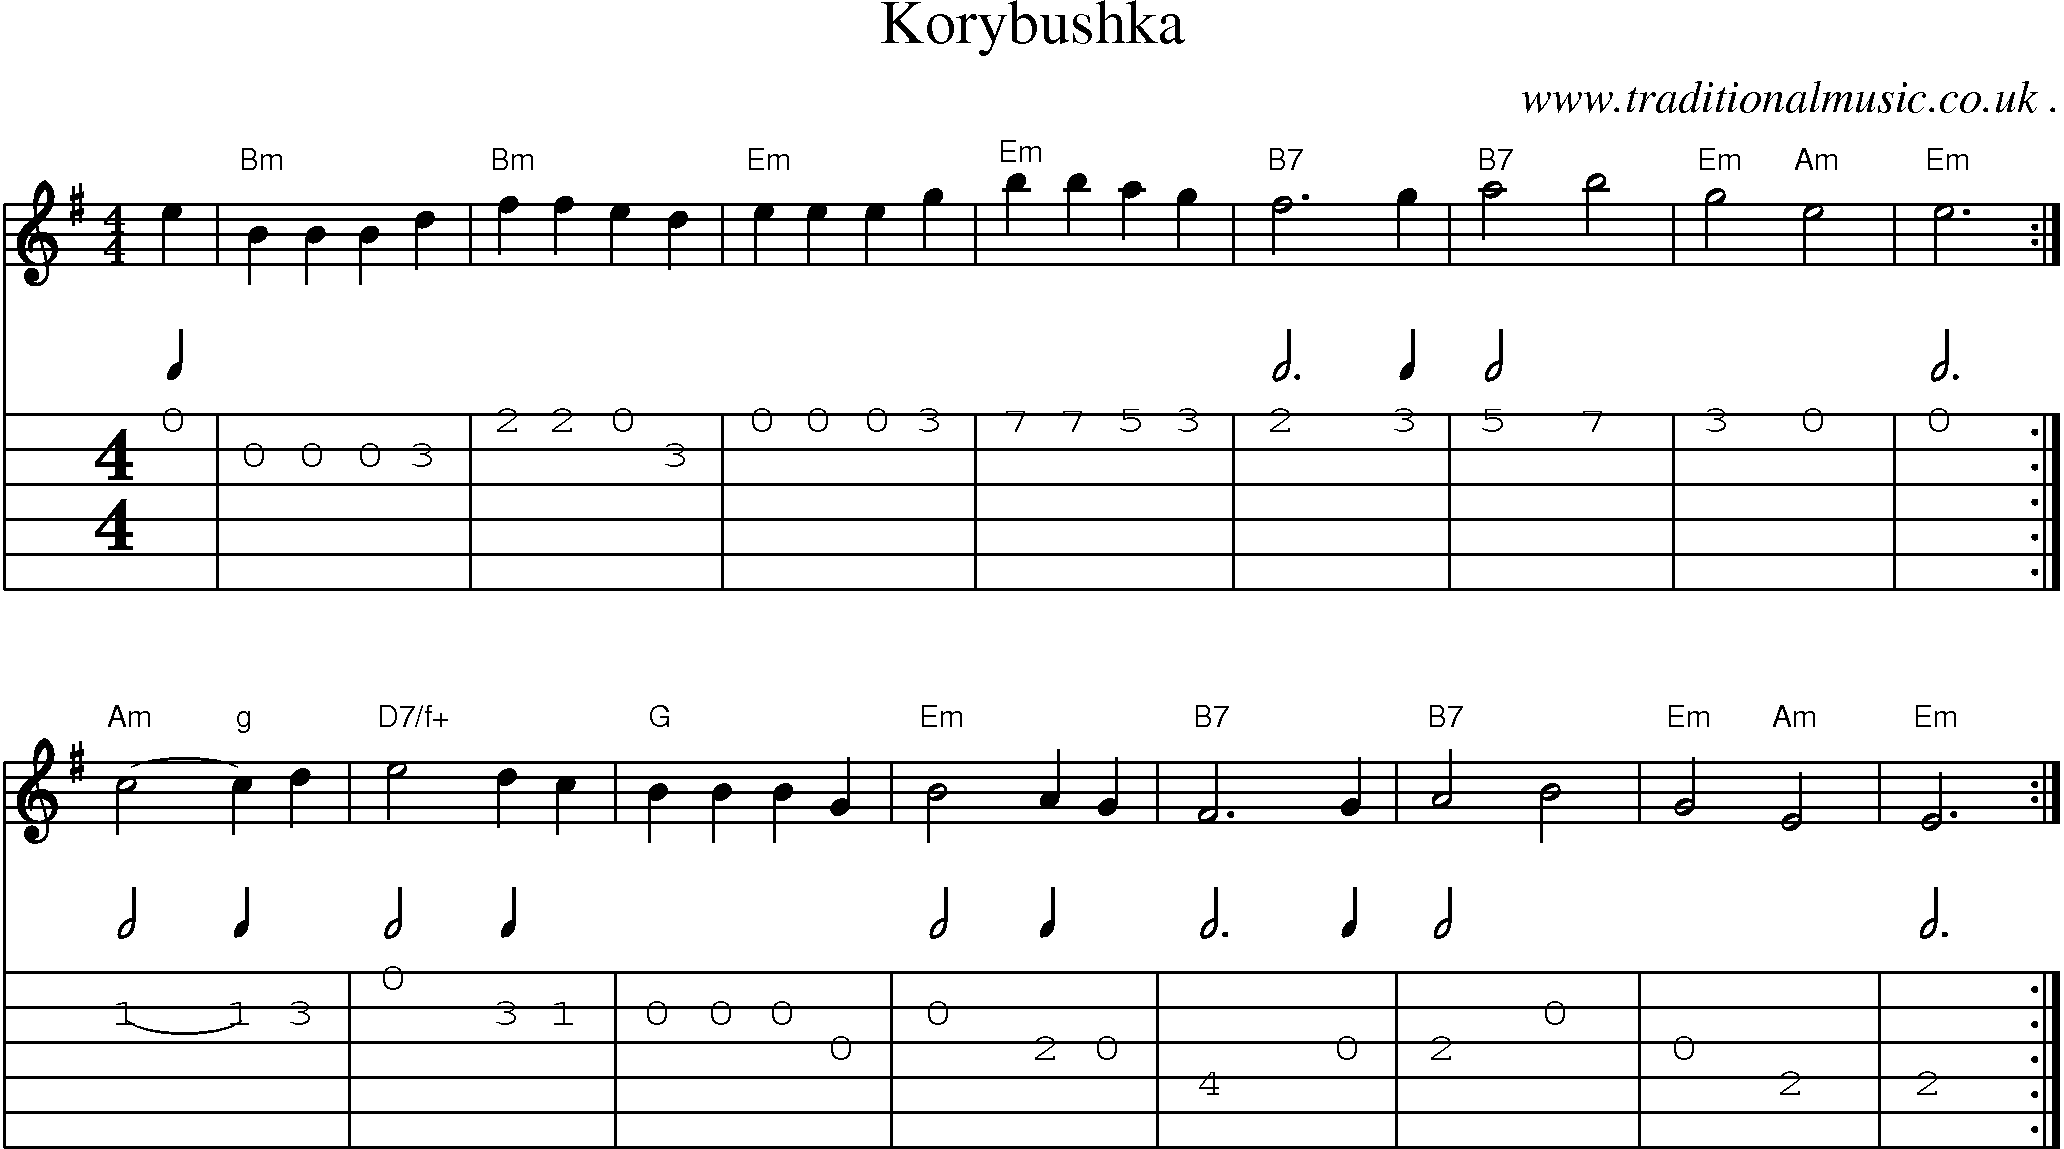 Sheet-Music and Guitar Tabs for Korybushka